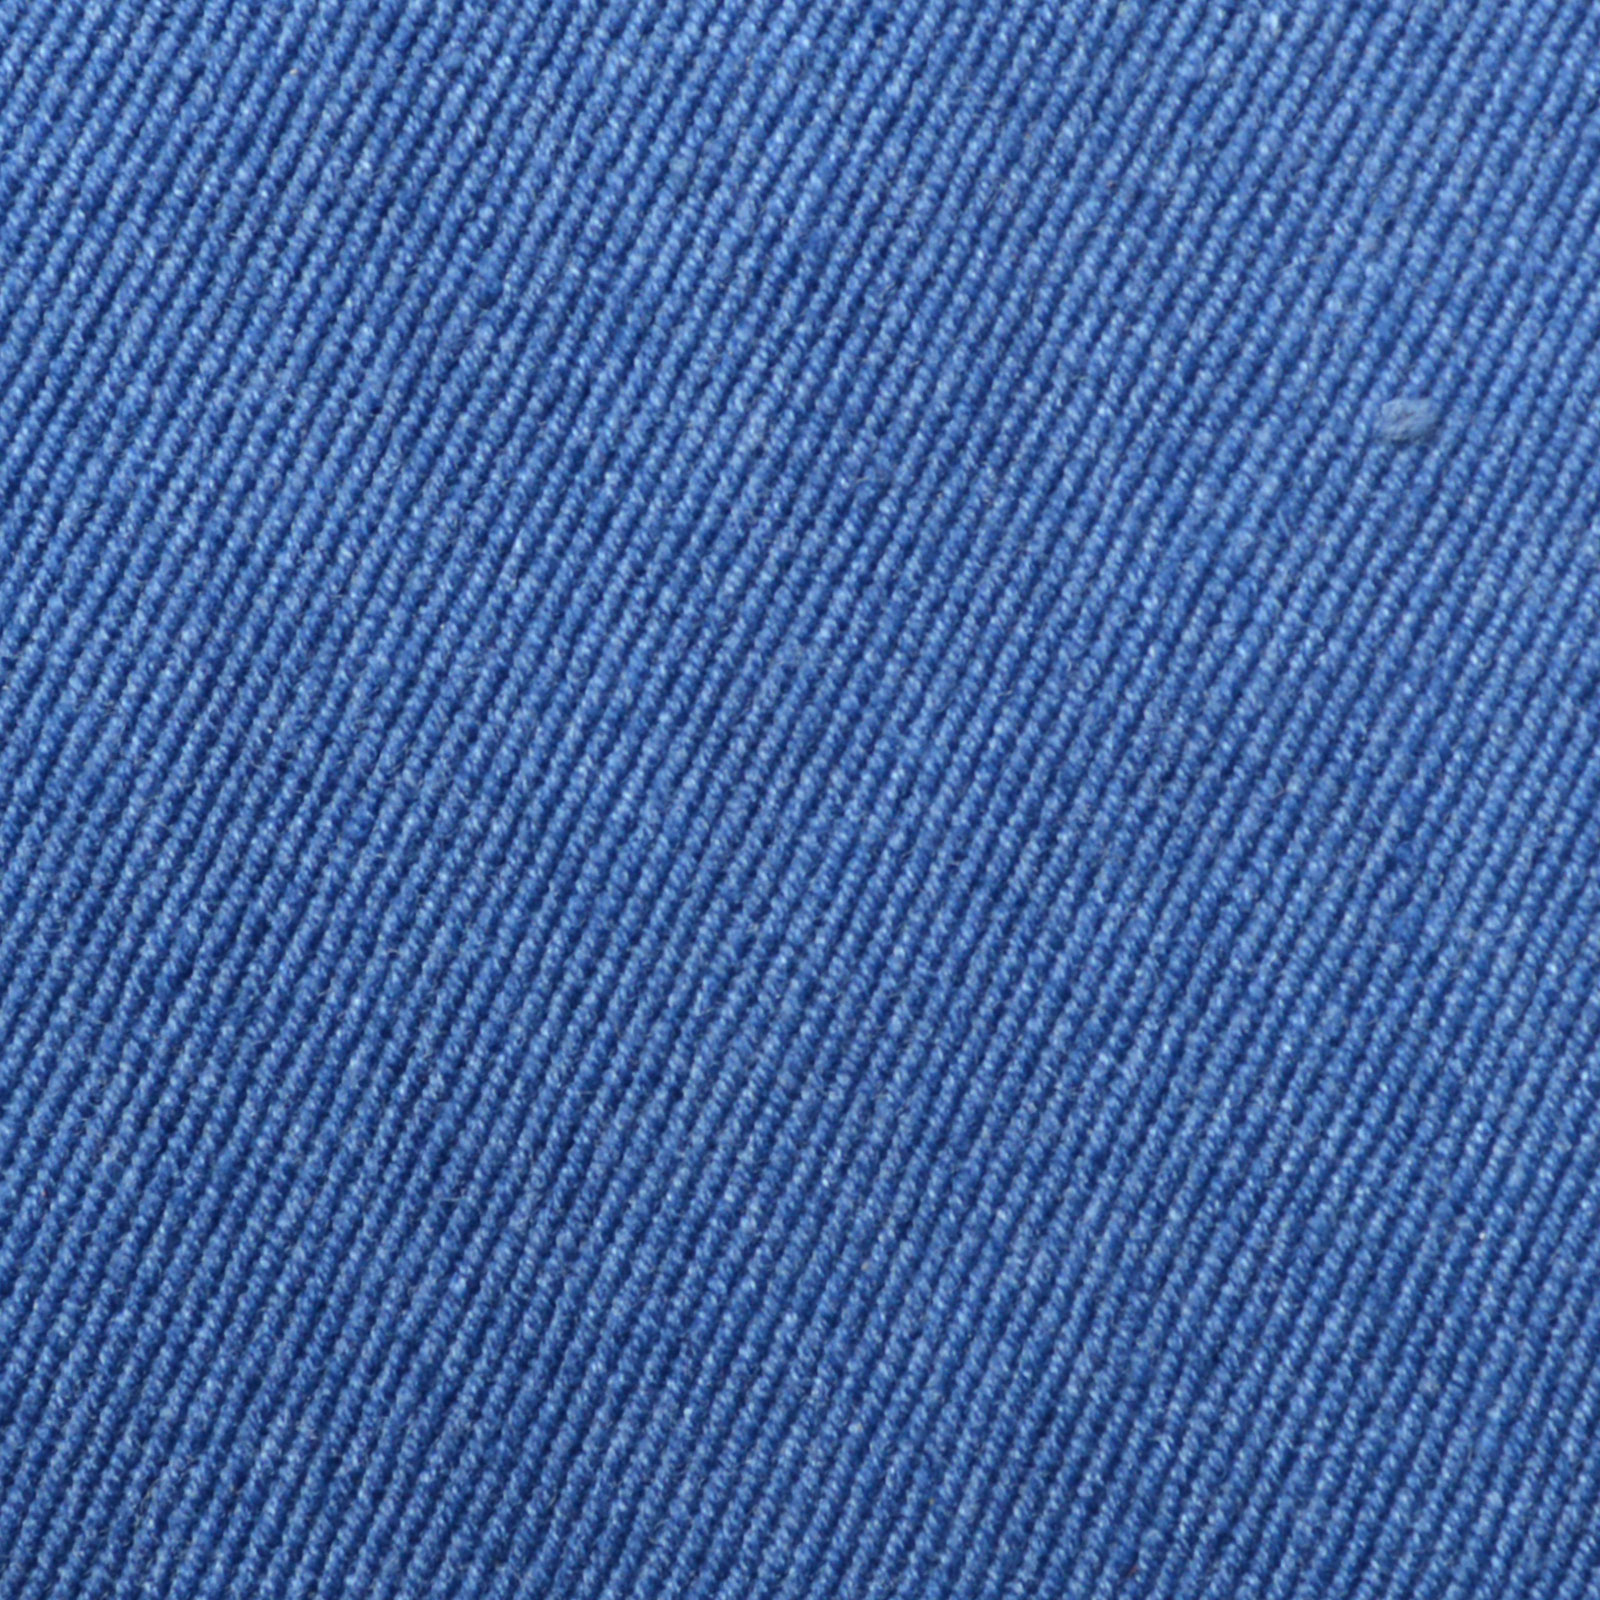 Medium Weight Handloom Denim 9 Oz - Oxford Blue - Natural Indigo - Fabric Dyed